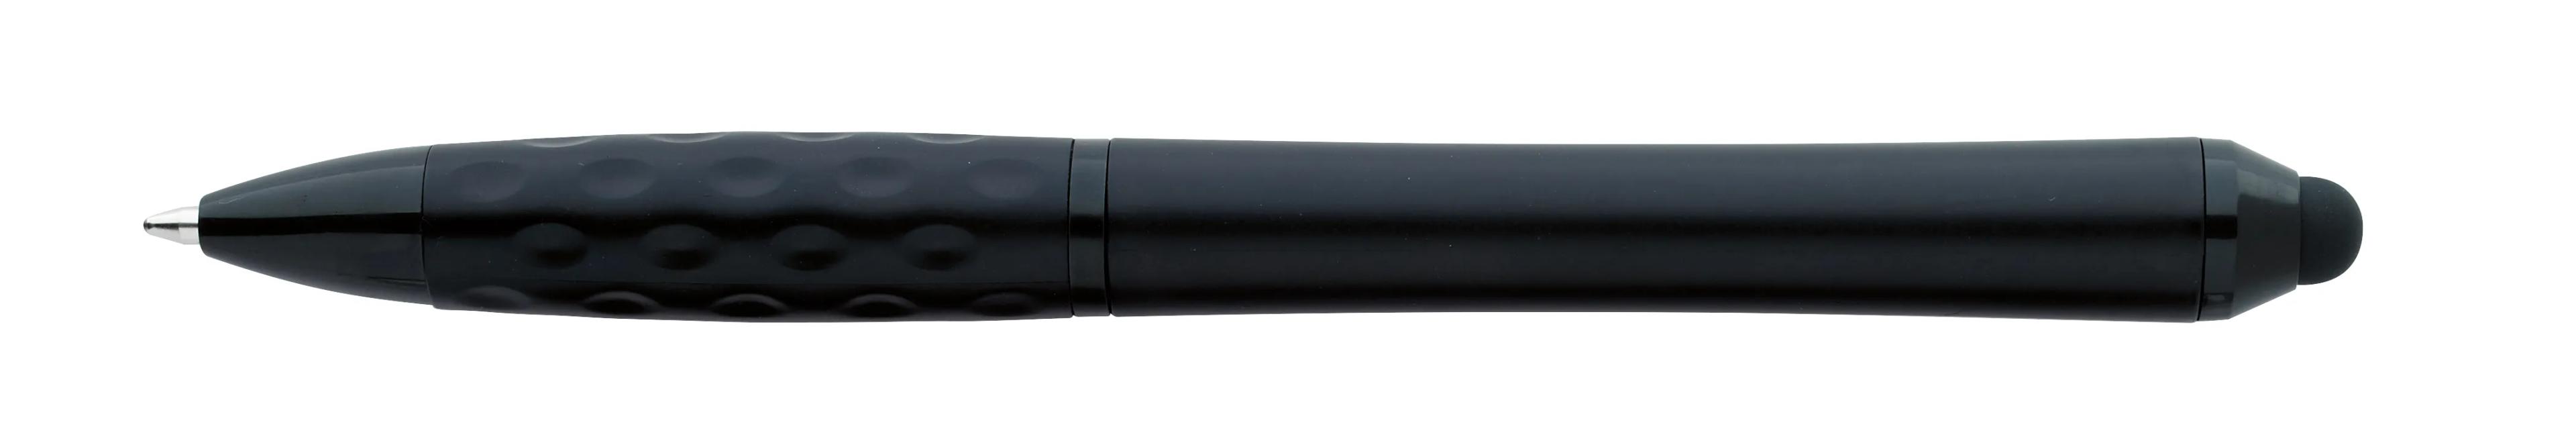 Tev Metallic Stylus Pen 1 of 77